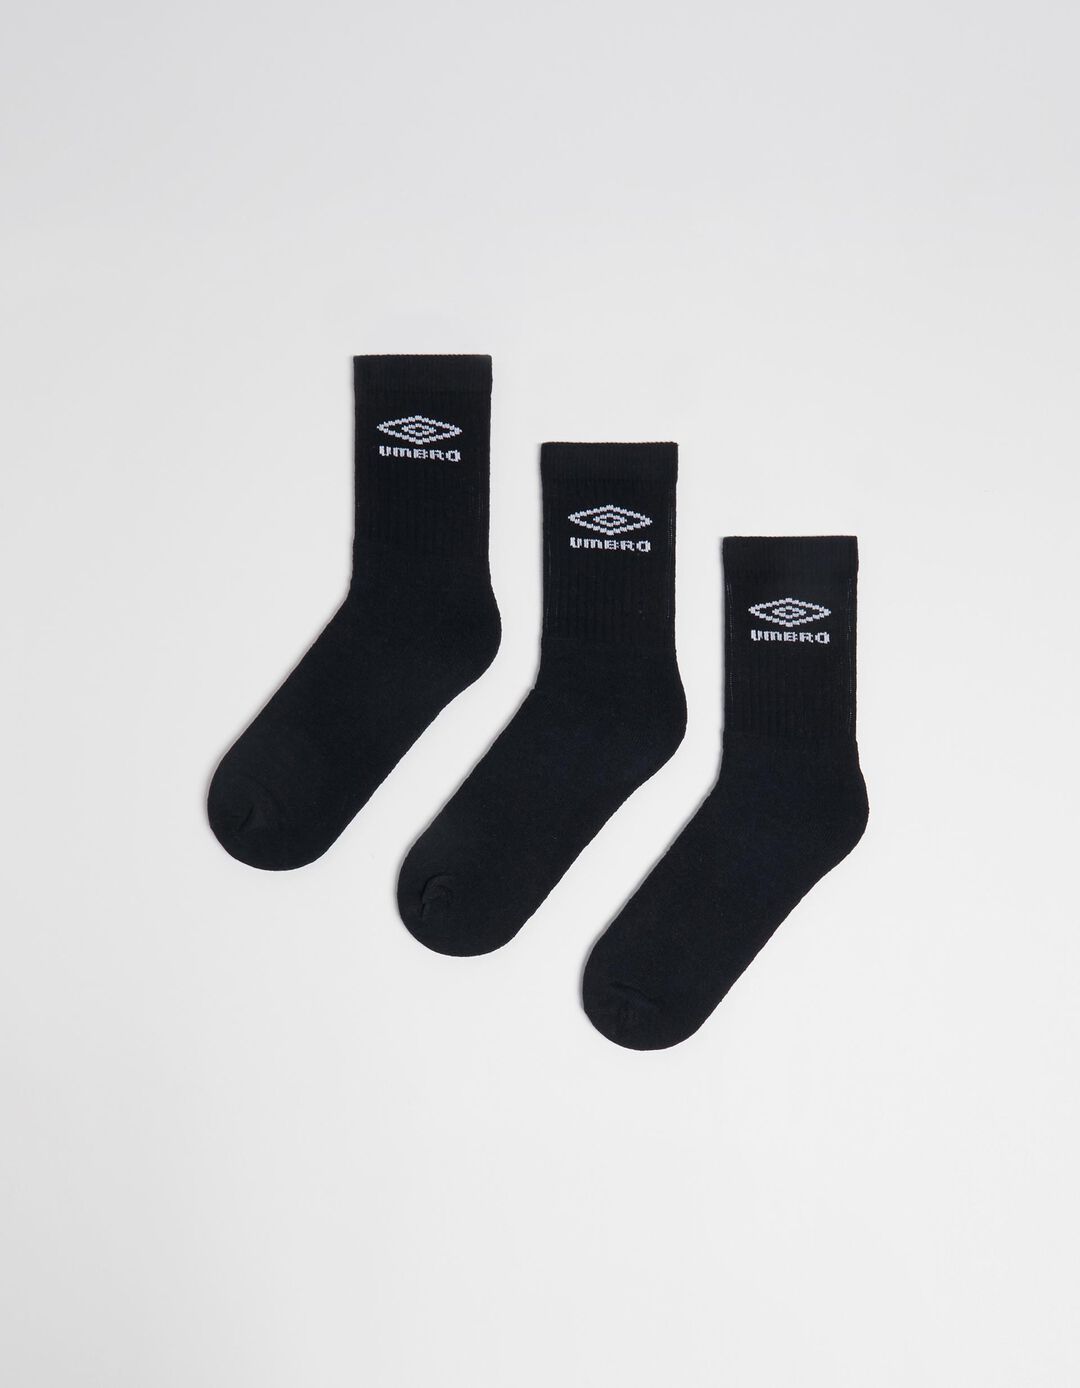 Pack 3 Pairs of Socks 'Umbro', Women, Black